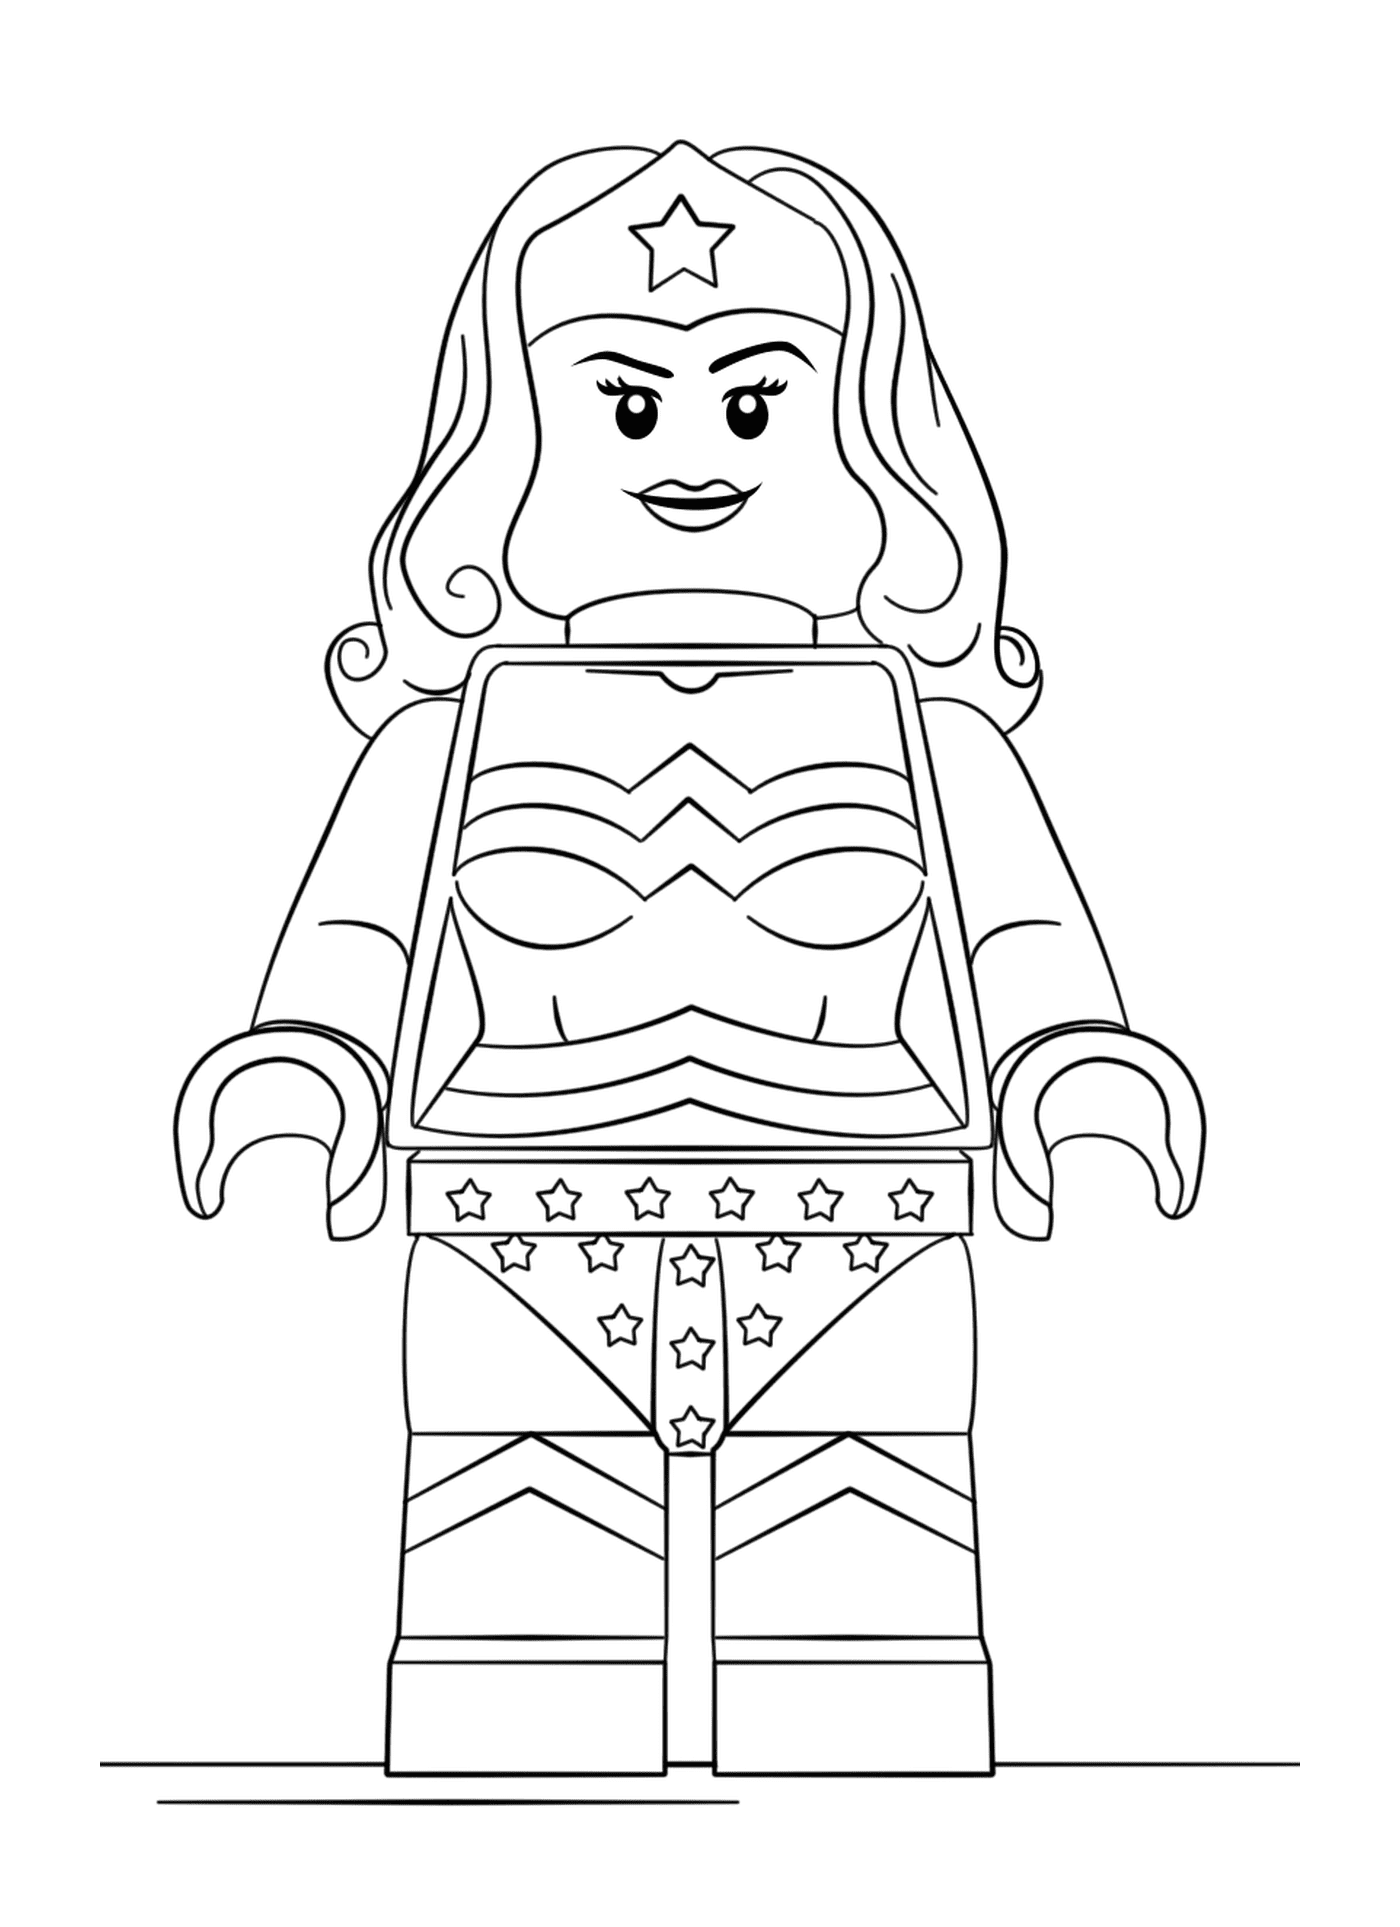  Wunderfrau in Lego 